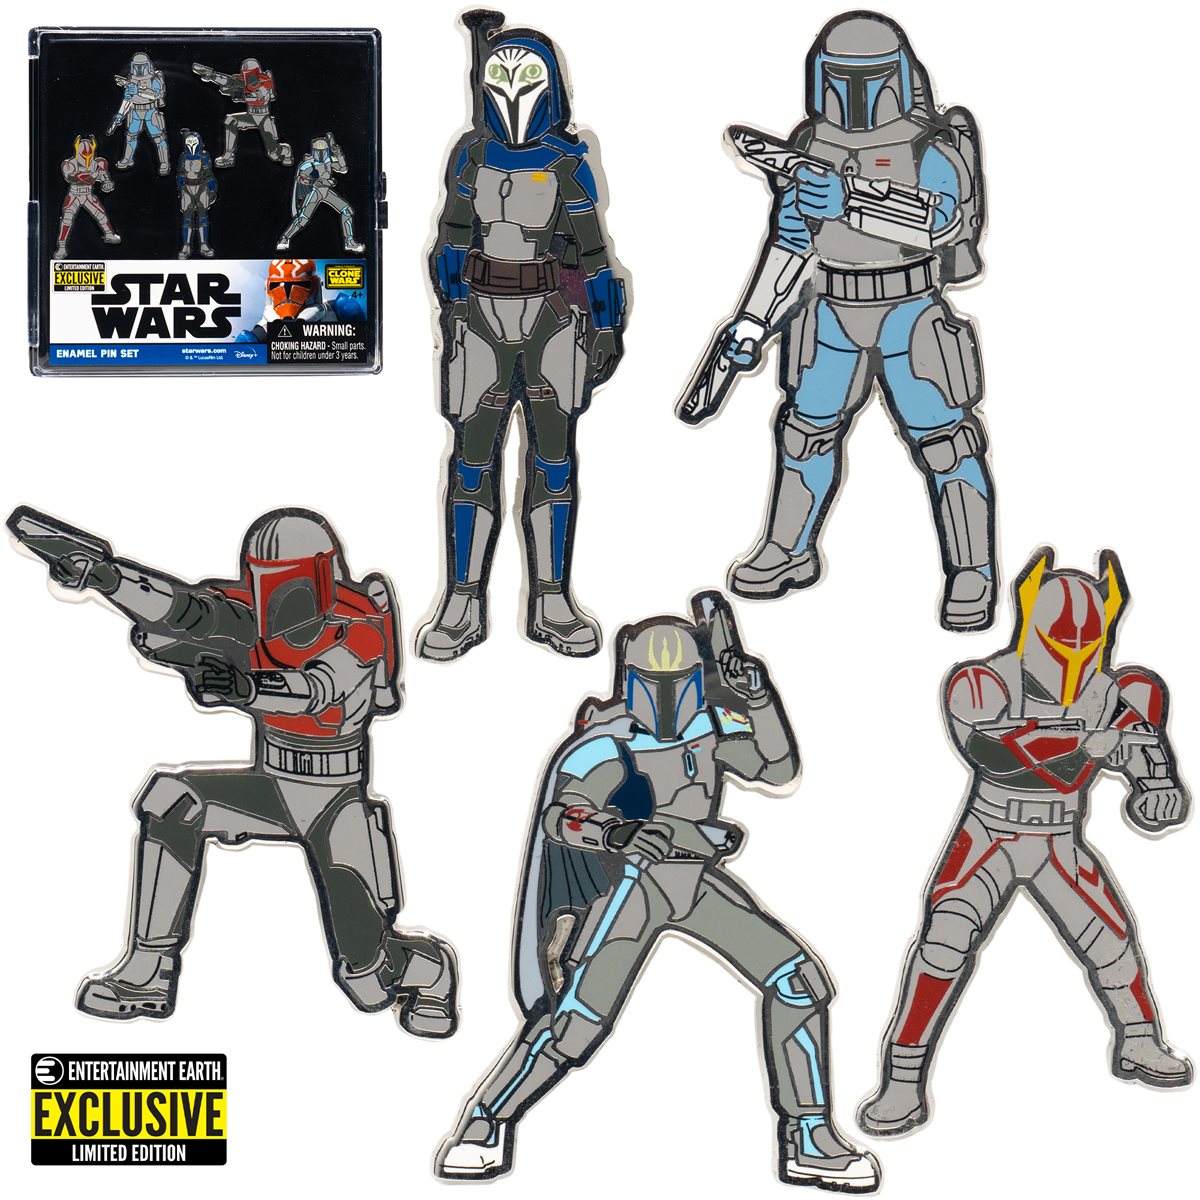 Star Wars: The Clone Wars Mandalorians Enamel Pin 5-Pack - Entertainment Earth Exclusive